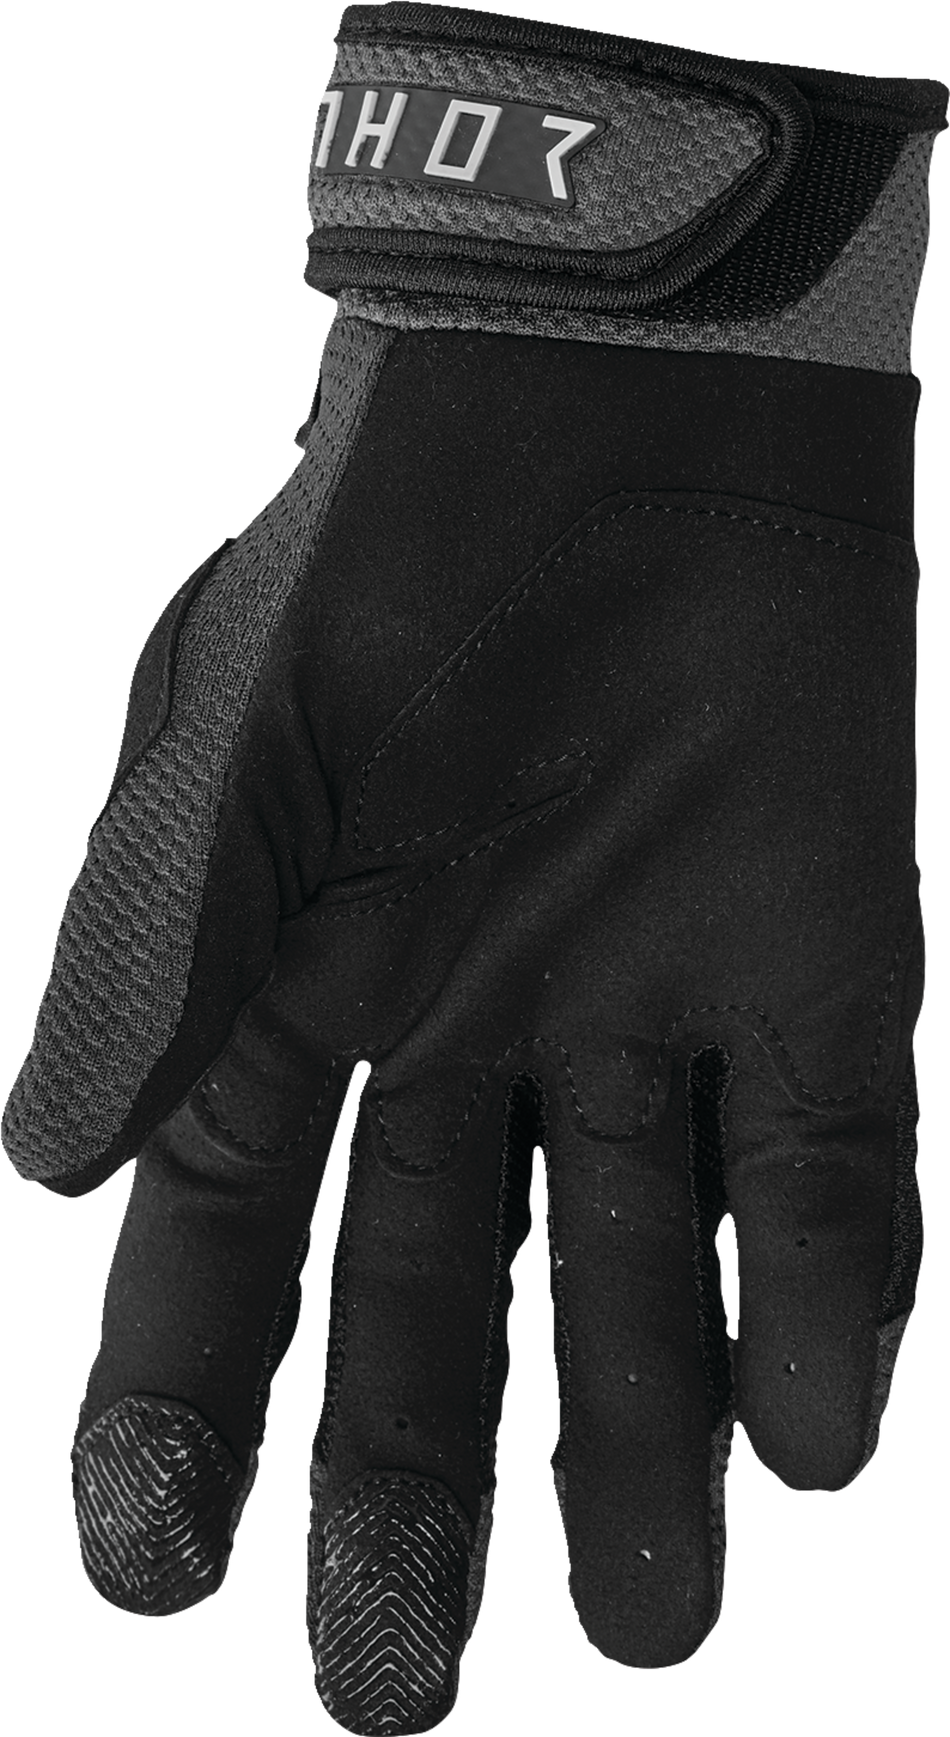 THOR Terrain Gloves - Black/Charcoal - Large 3330-7282